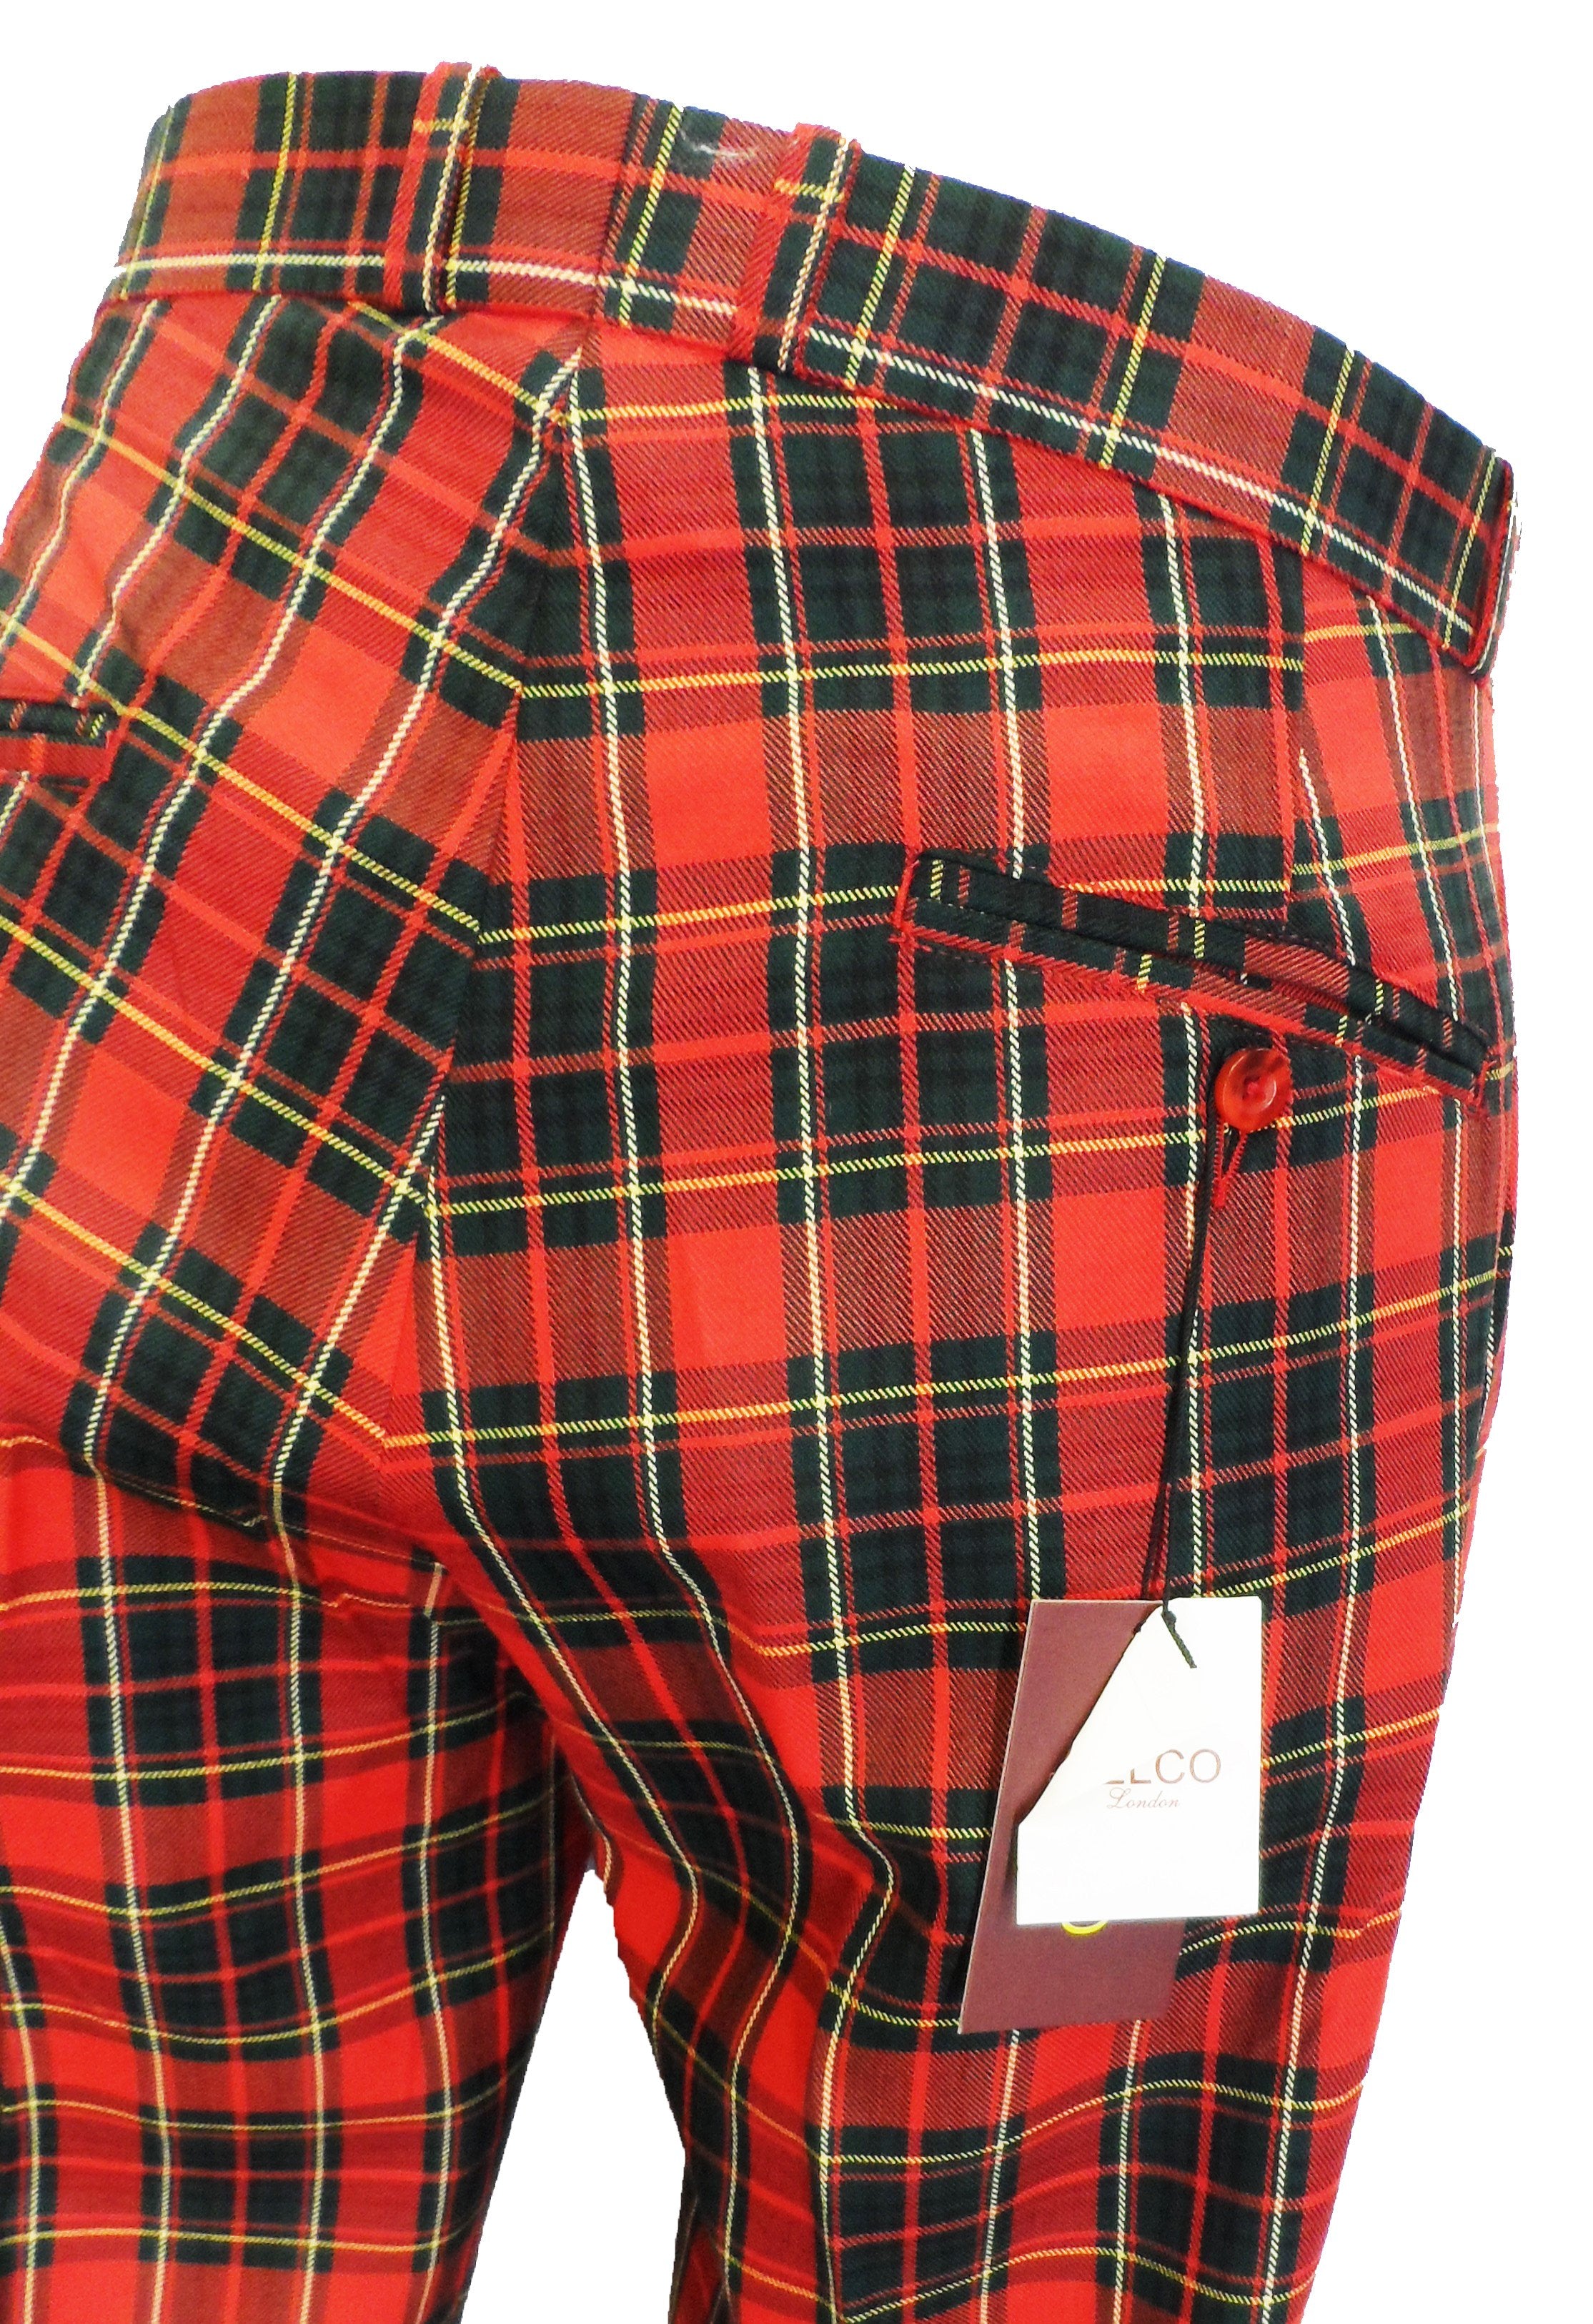 How to Wear Tartan Trews | Scotland Kilt Co